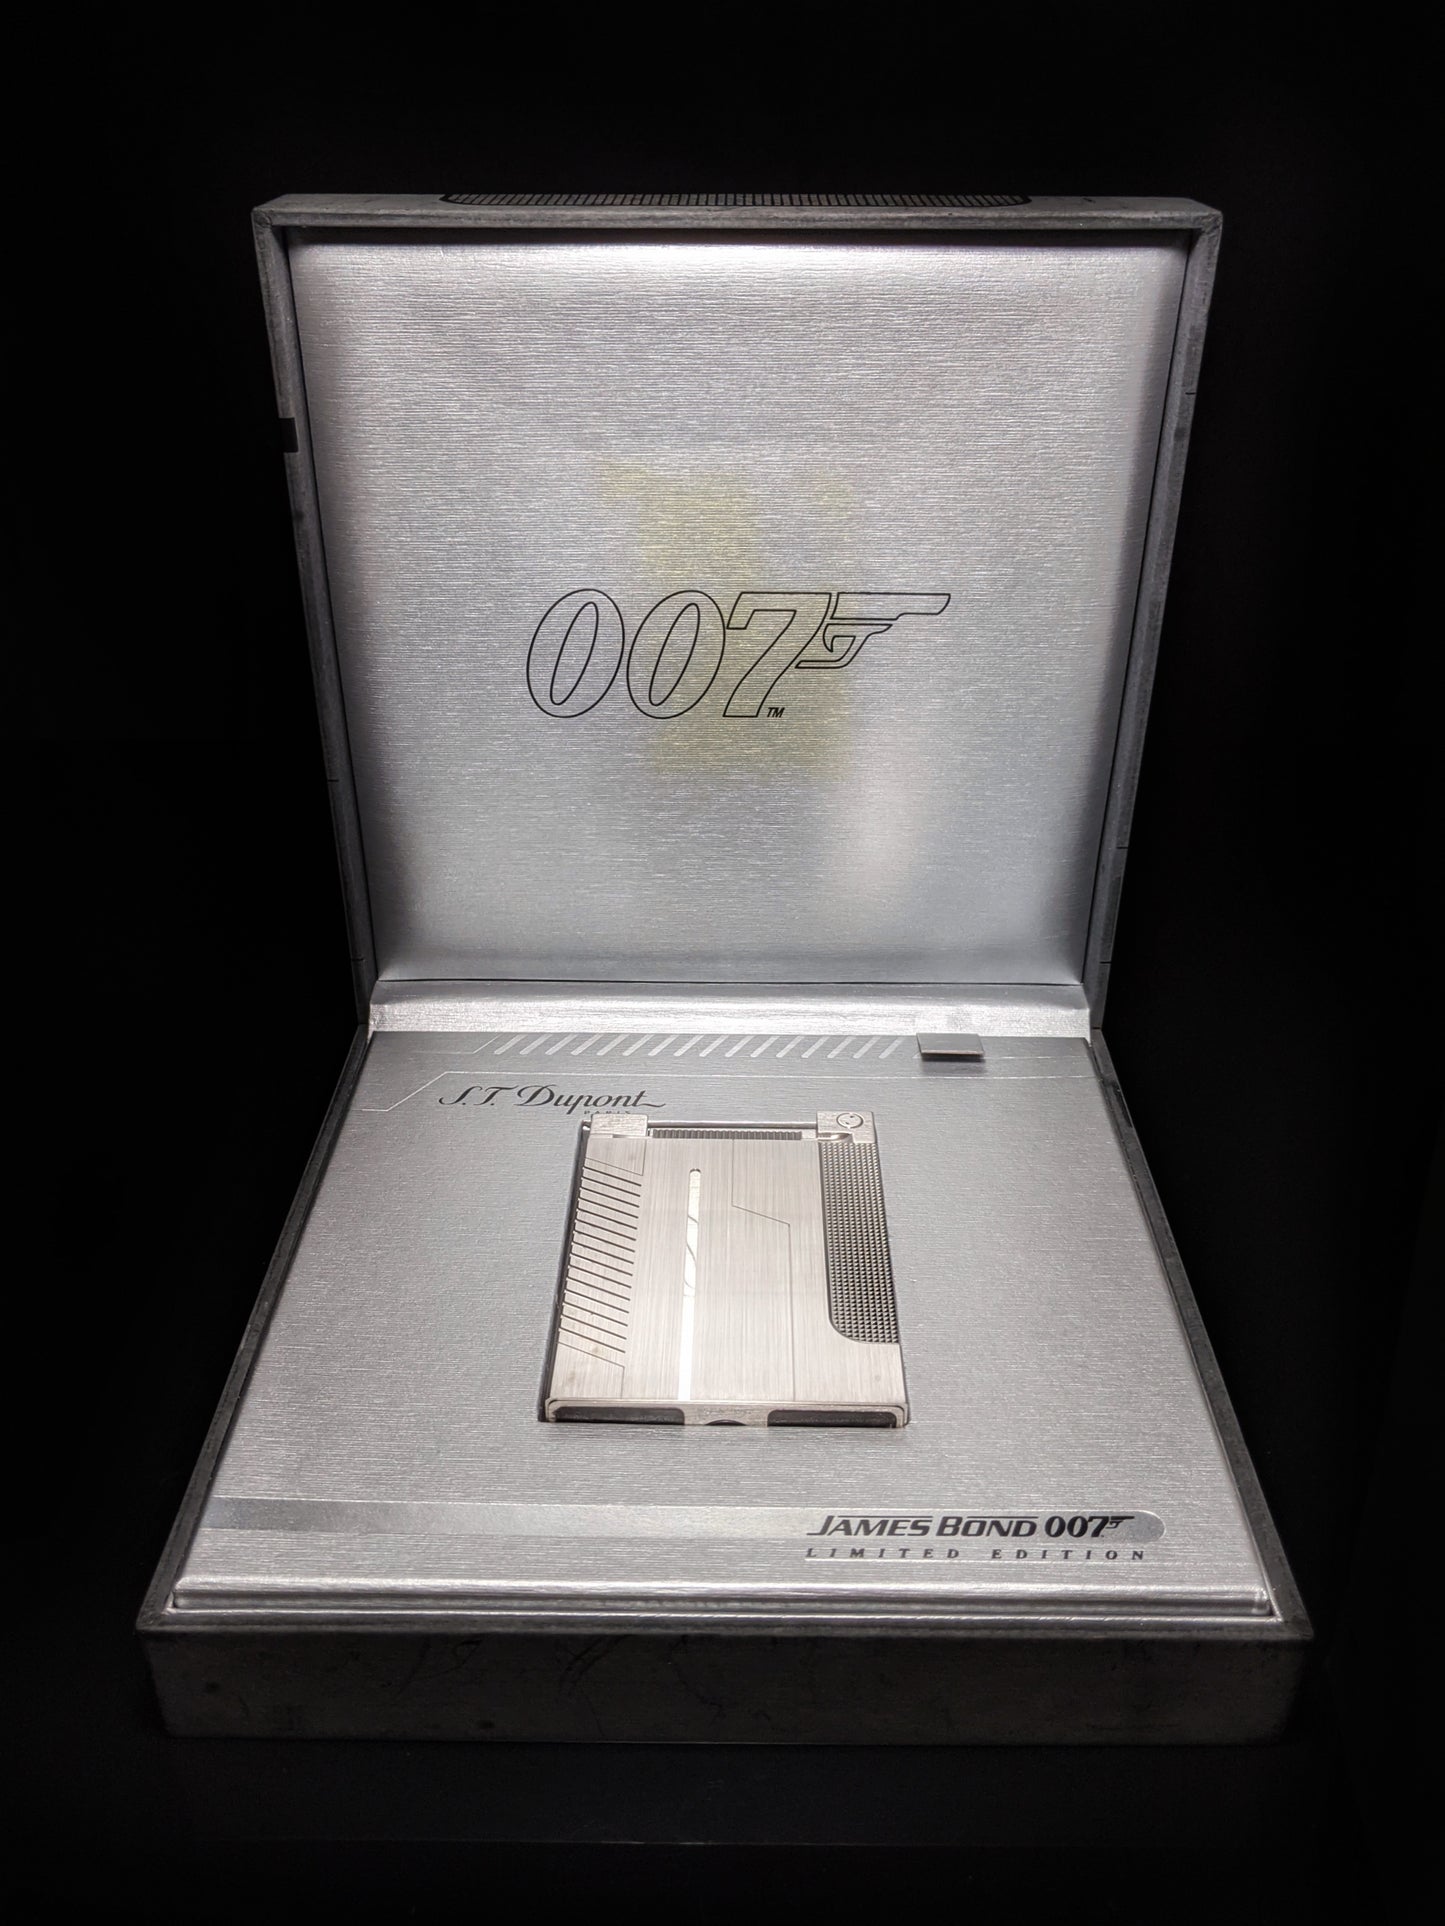 s.t.dupont James Bond 007 jeroboam table lighter